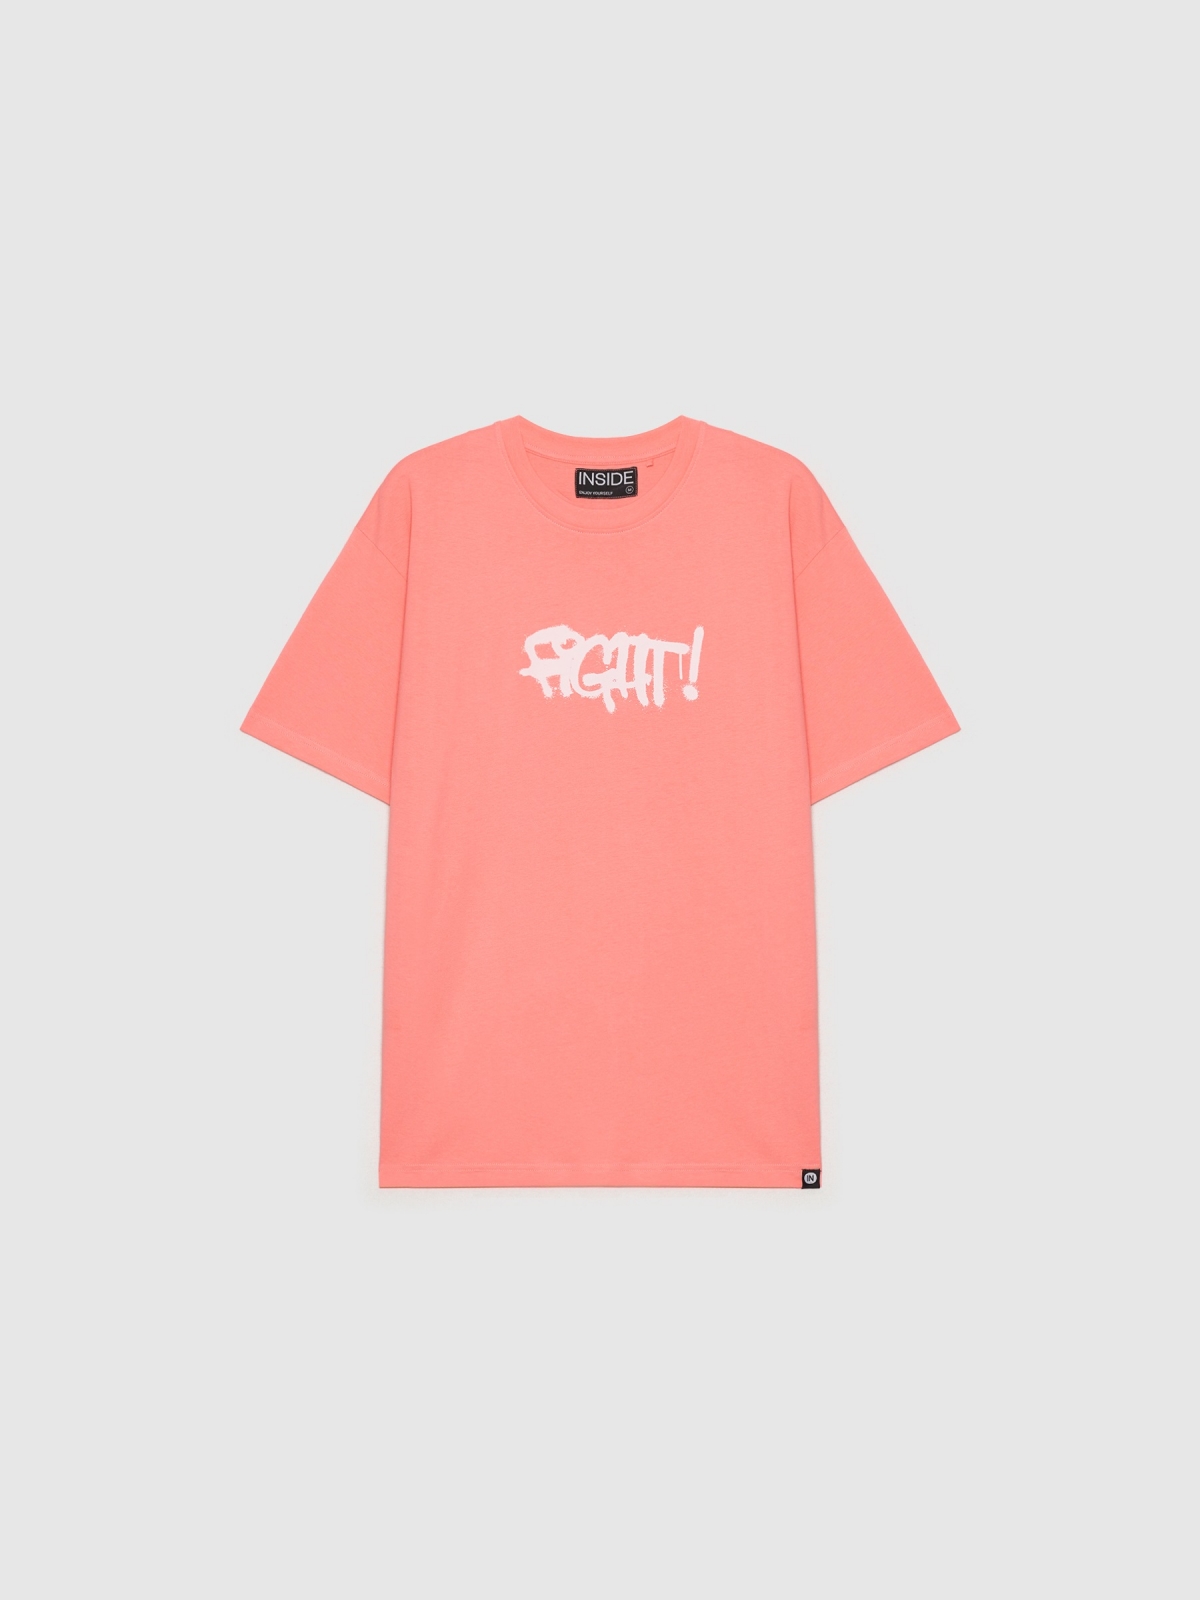  Fight! T-shirt pink